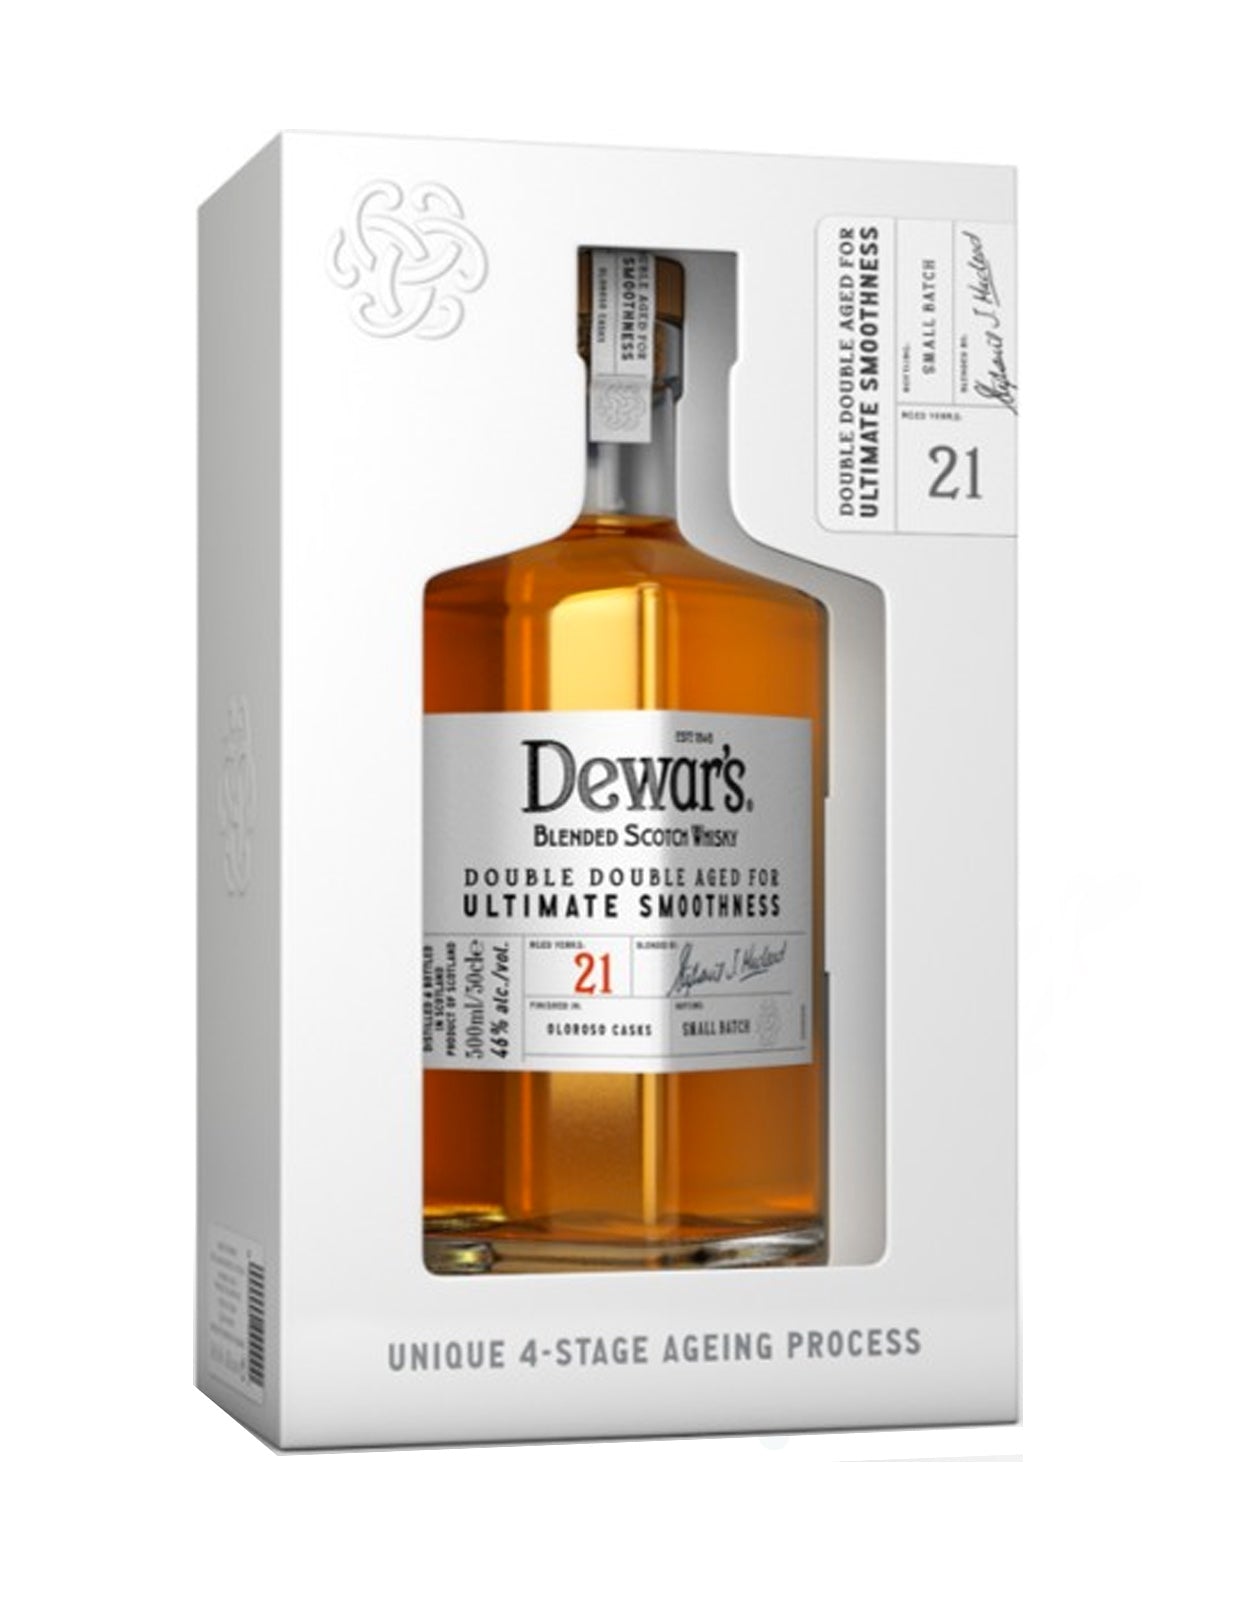 Dewar's Double Double 21 Year Old - 375 ml